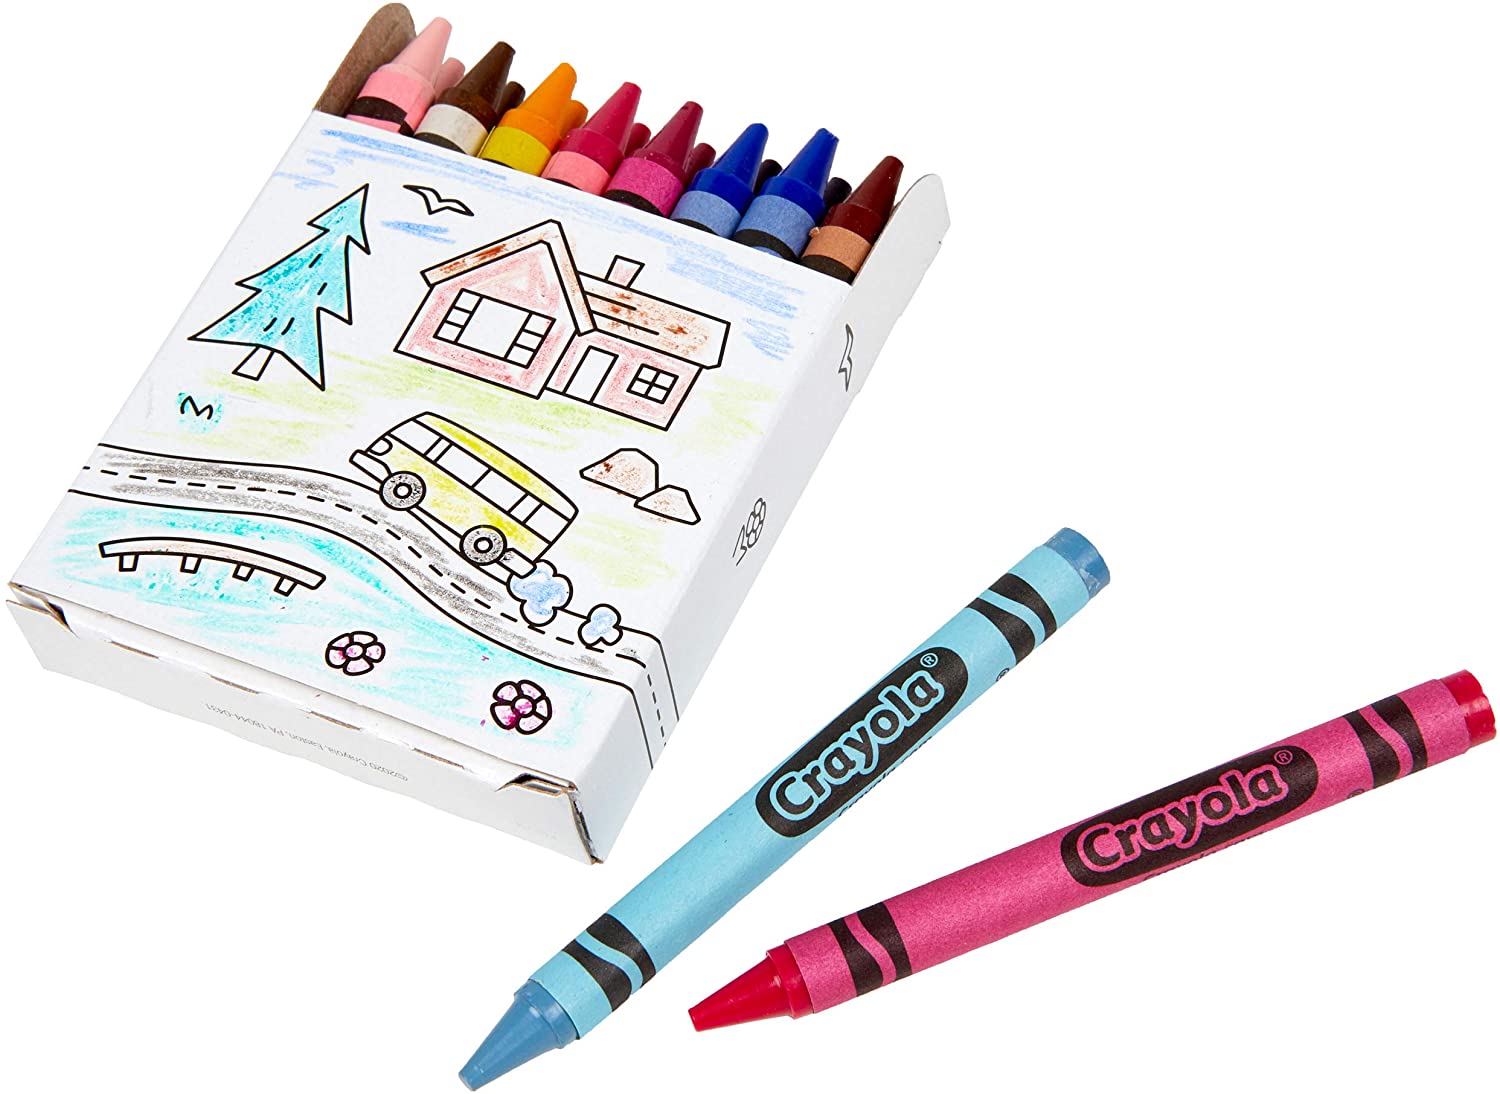 Crayola 240 Crayons, Bulk Crayon Set, Cute School Supplies, Gift